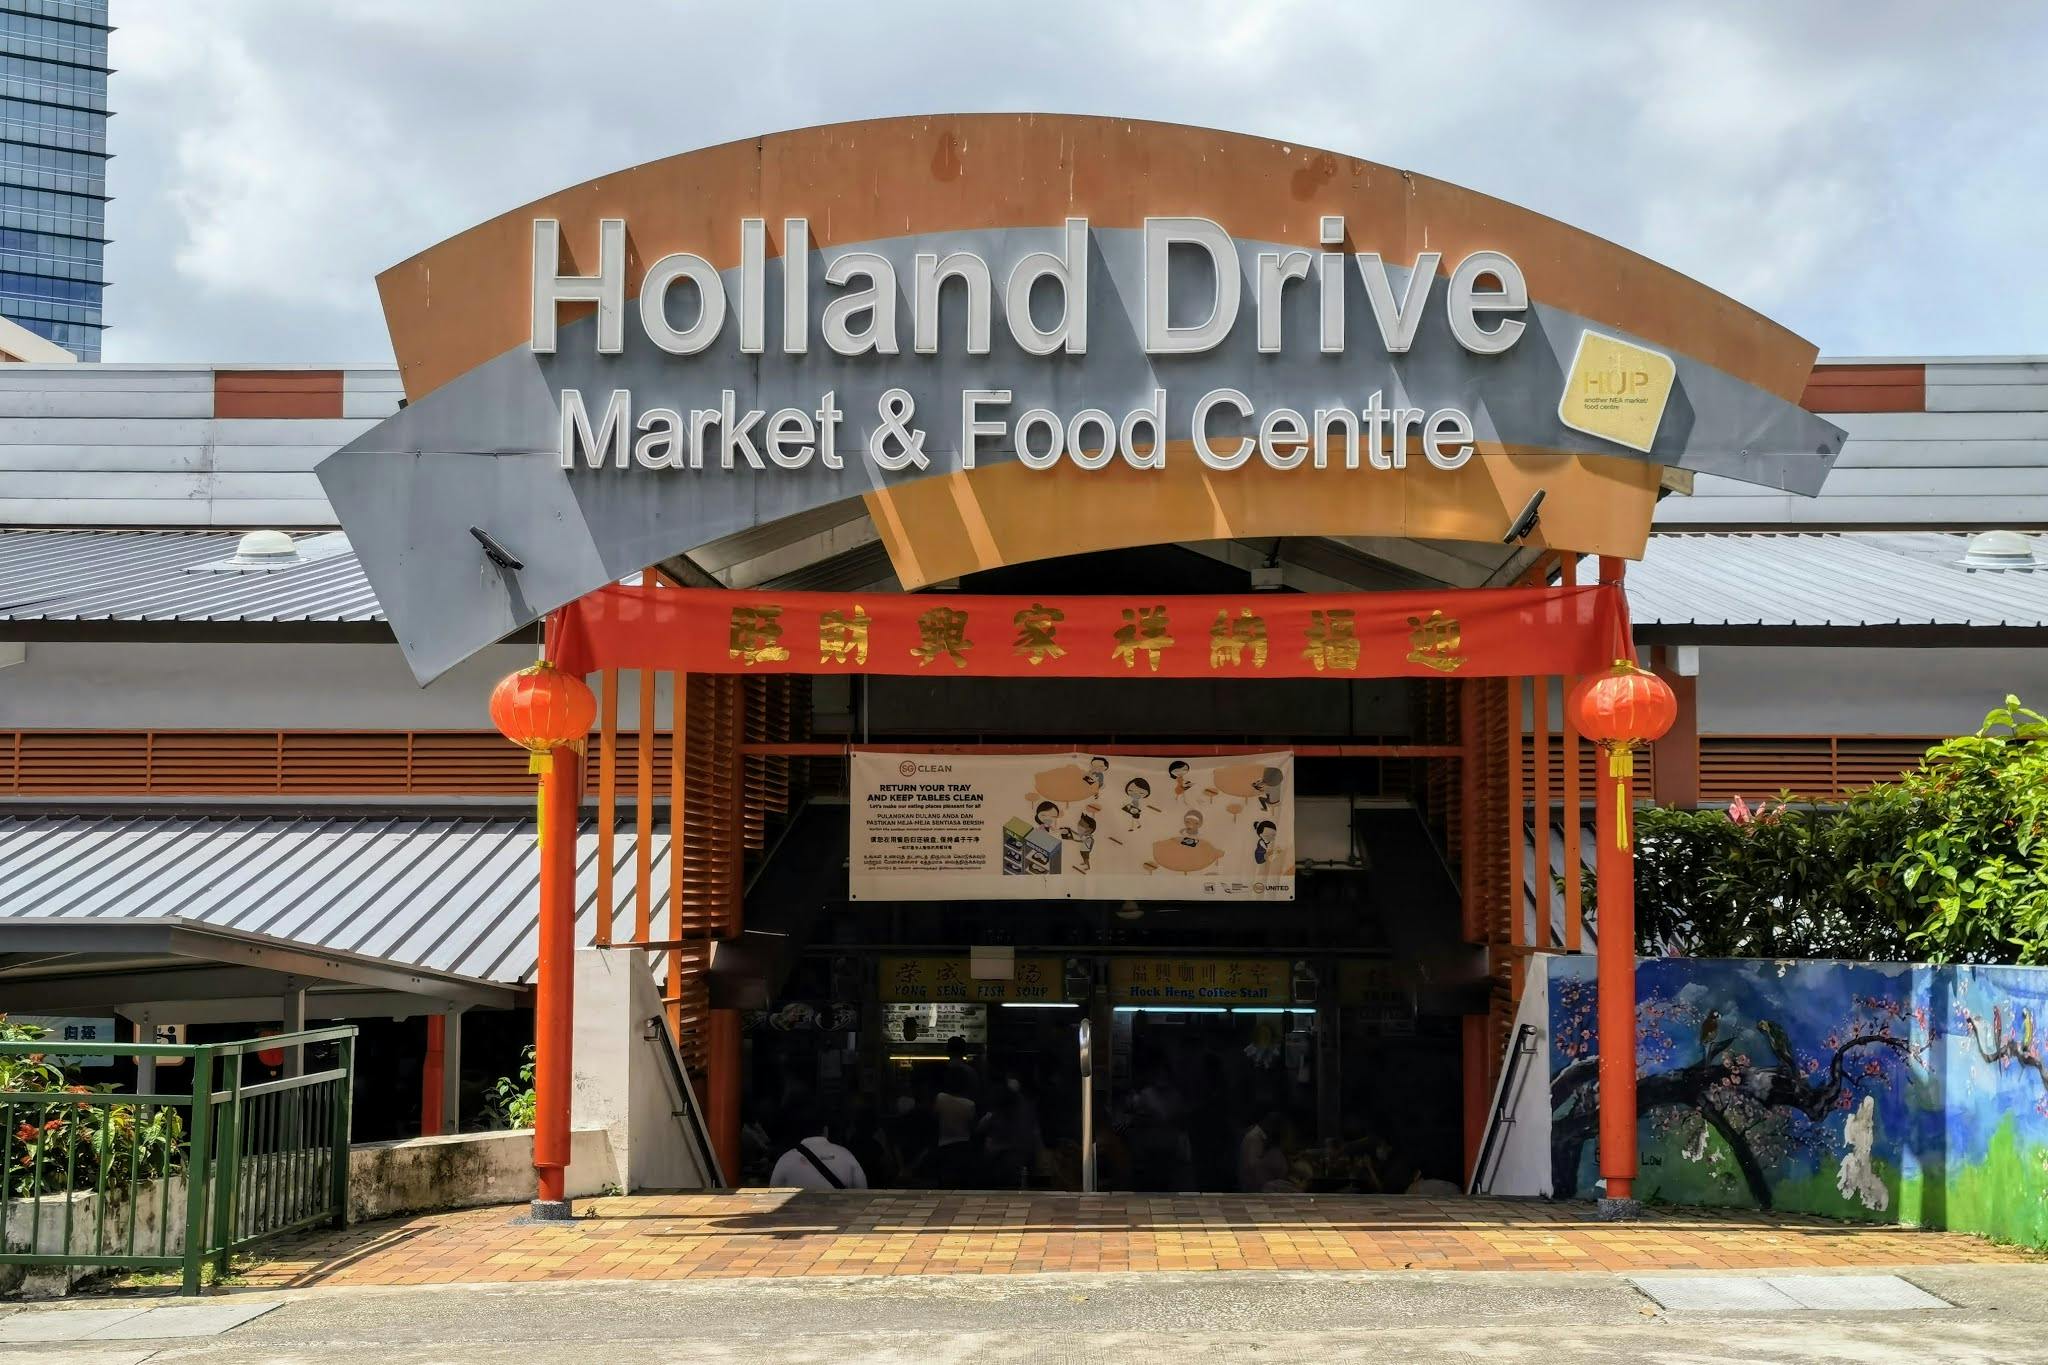  Holland Drive Market & Food Centre